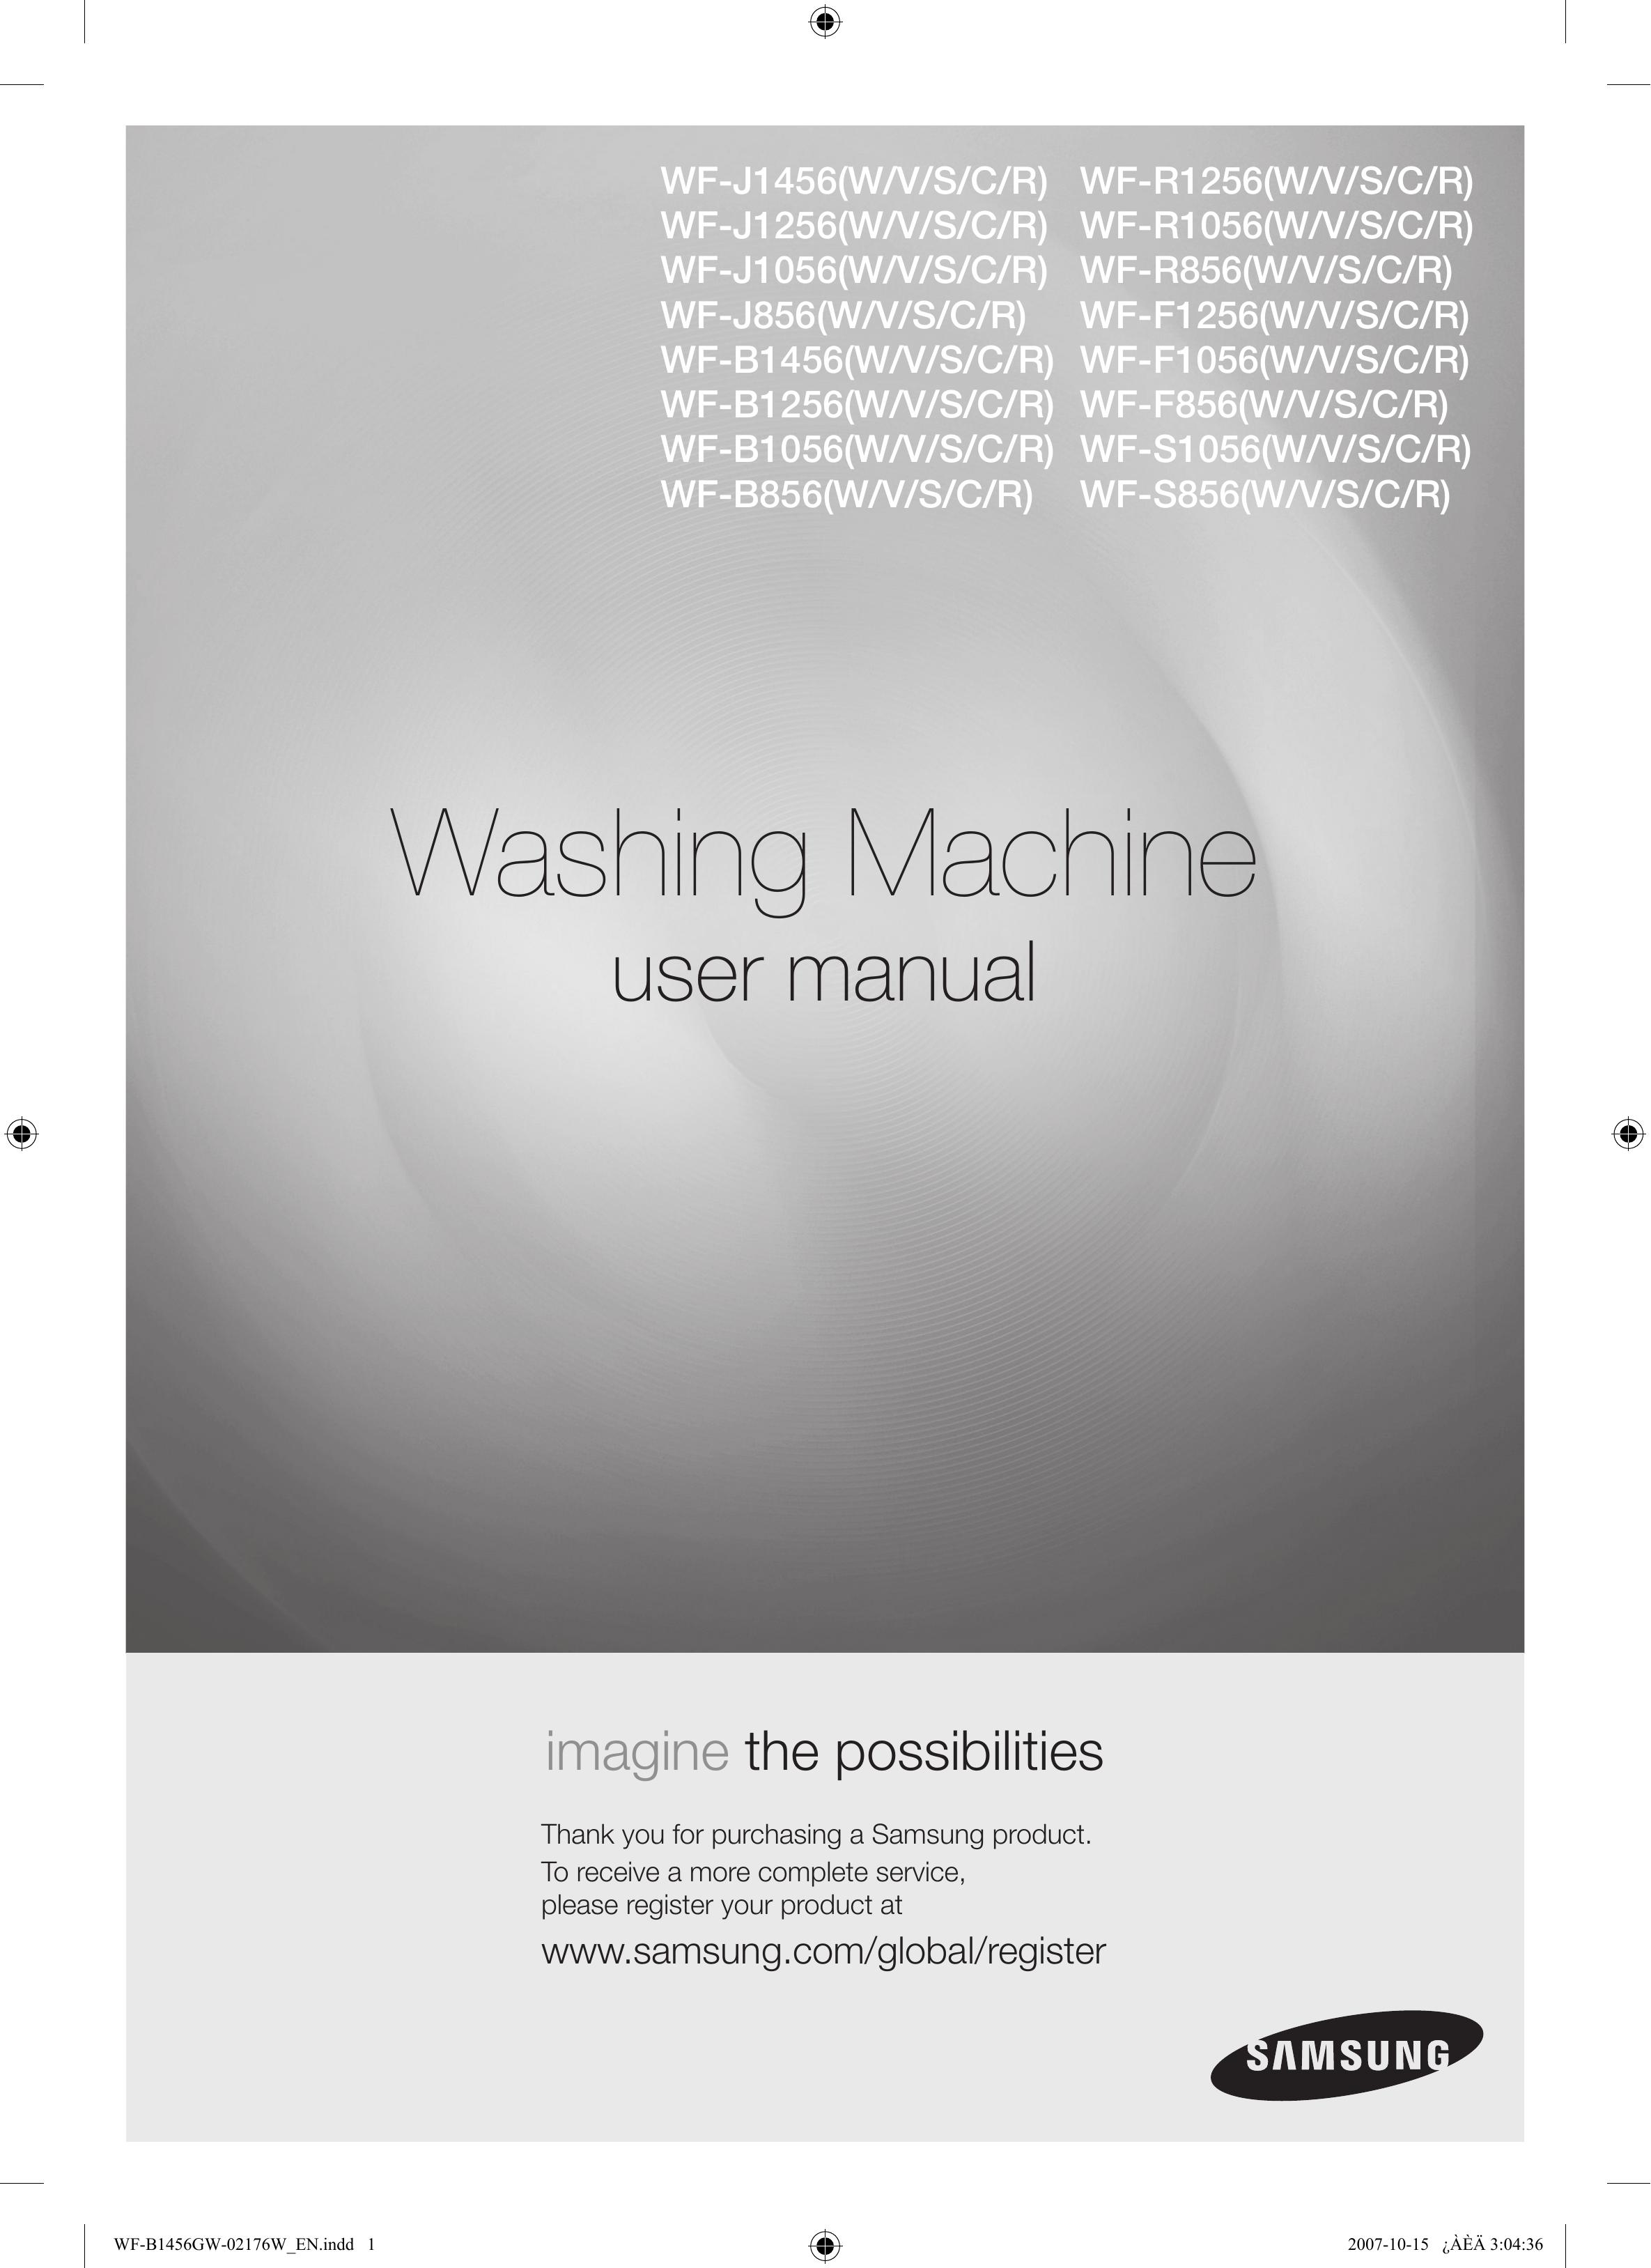 Samsung WF-B1056 Washer/Dryer User Manual